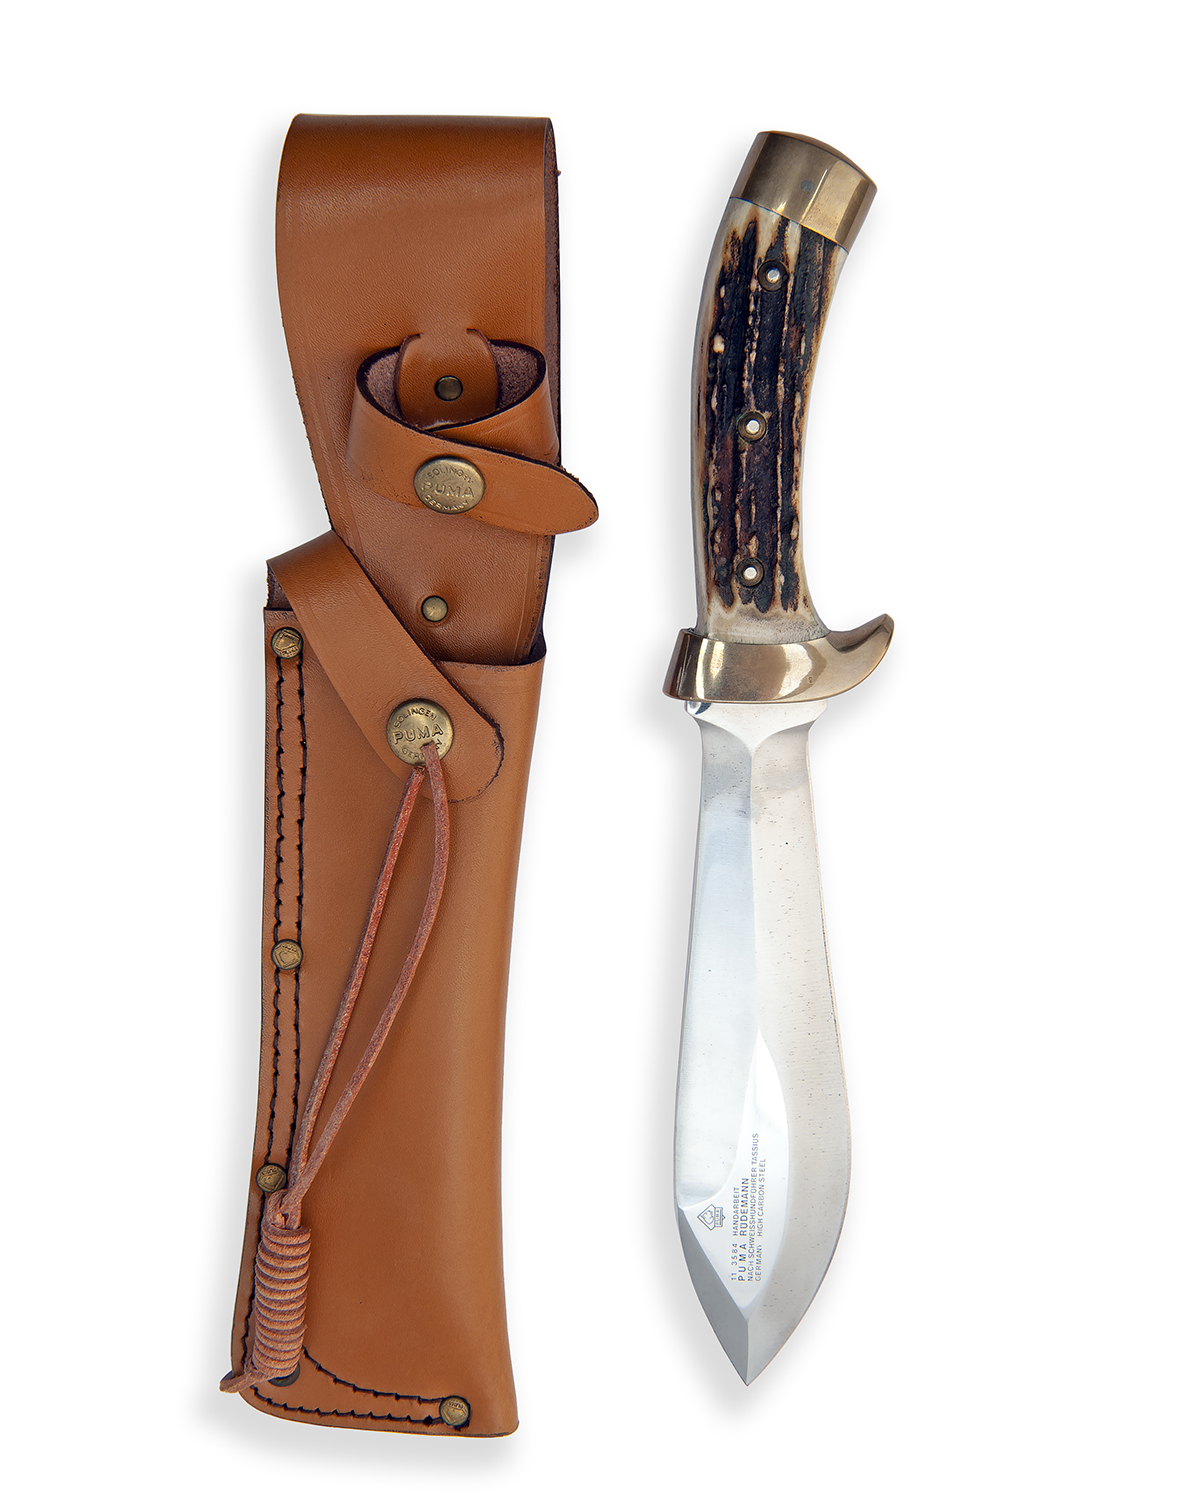 PUMA, GERMANY A CASED STAG-HANDLED BOLO-BLADED SPORTING KNIFE, MODEL '11 3584 PUMA RUDEMANN', serial